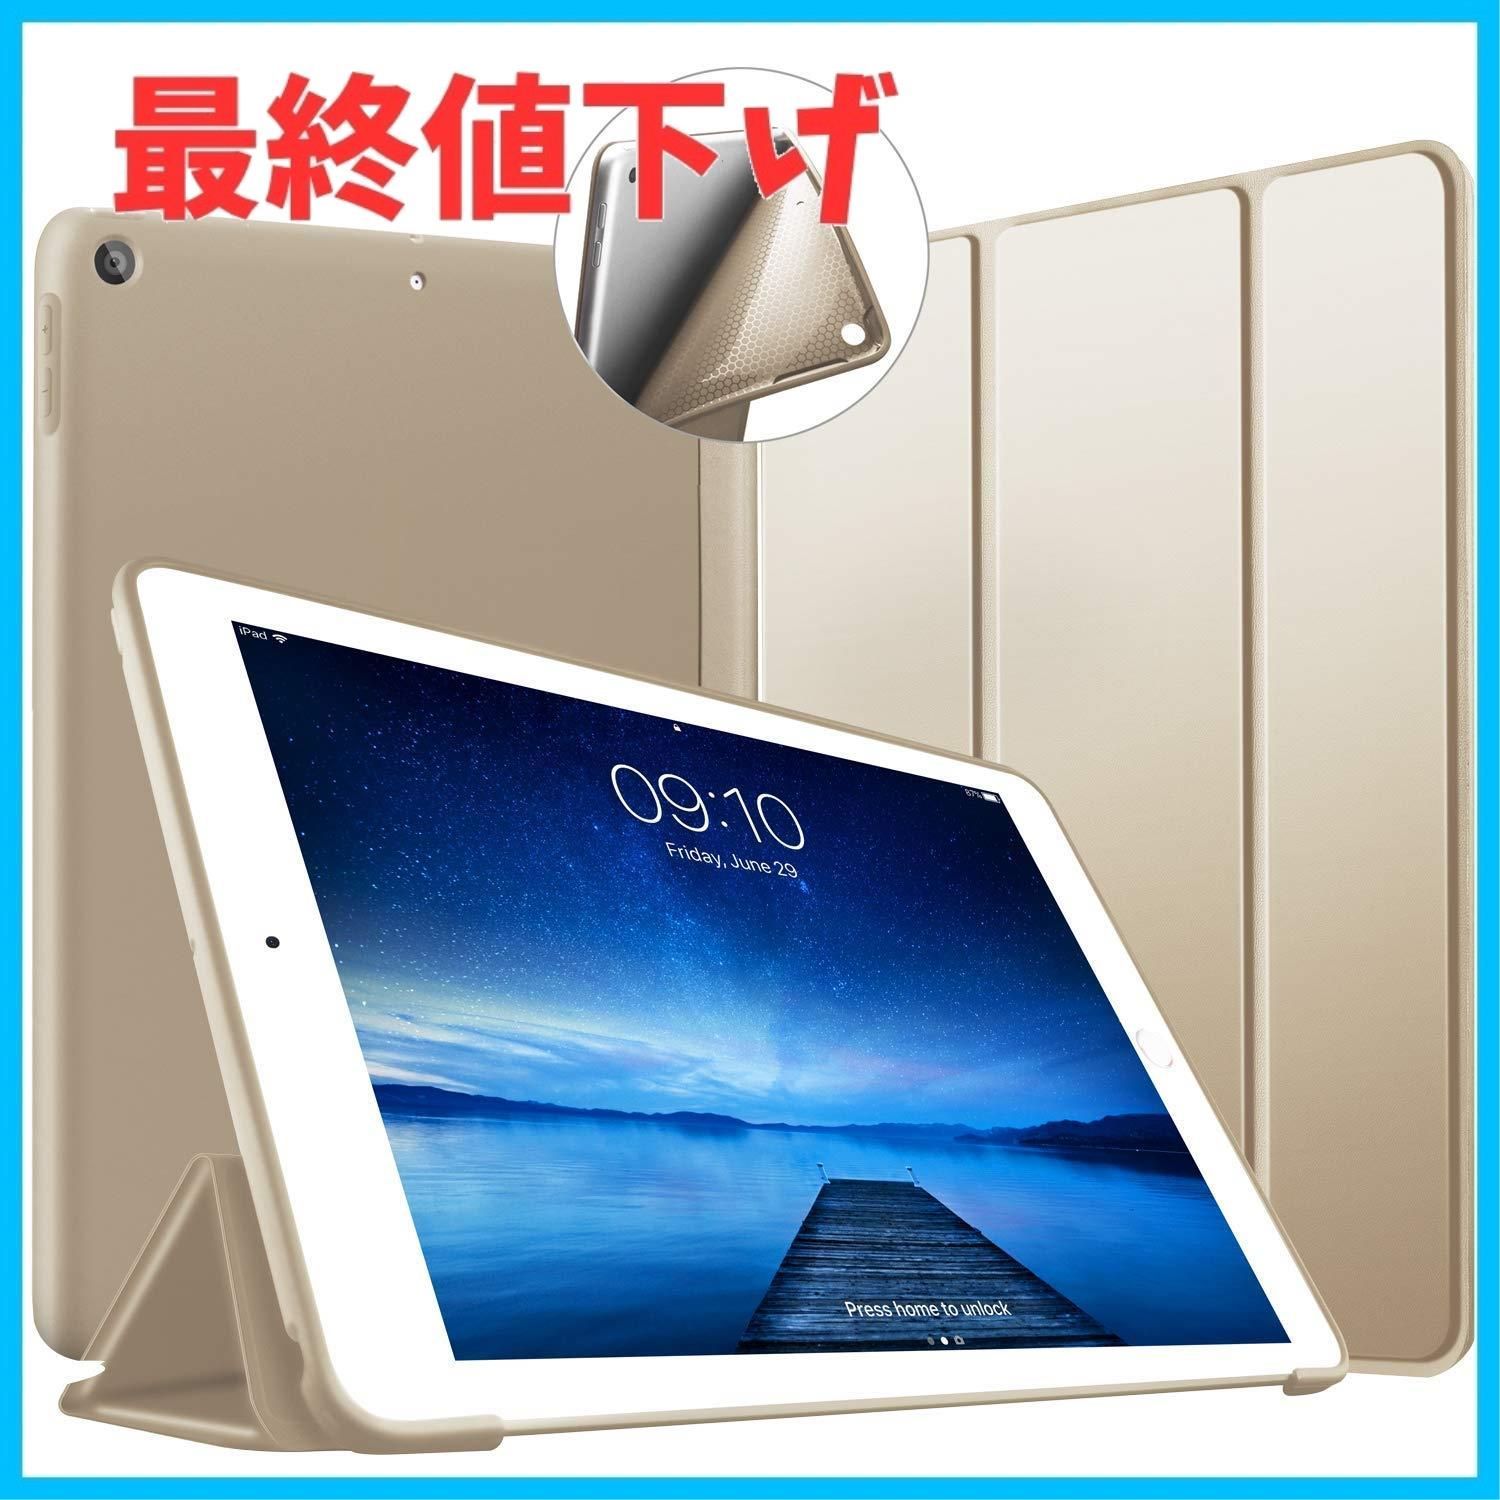 人気商品】A1822 / A1893 / VAGHVEO 新iPad 9.7 2018/2017ケース 超薄